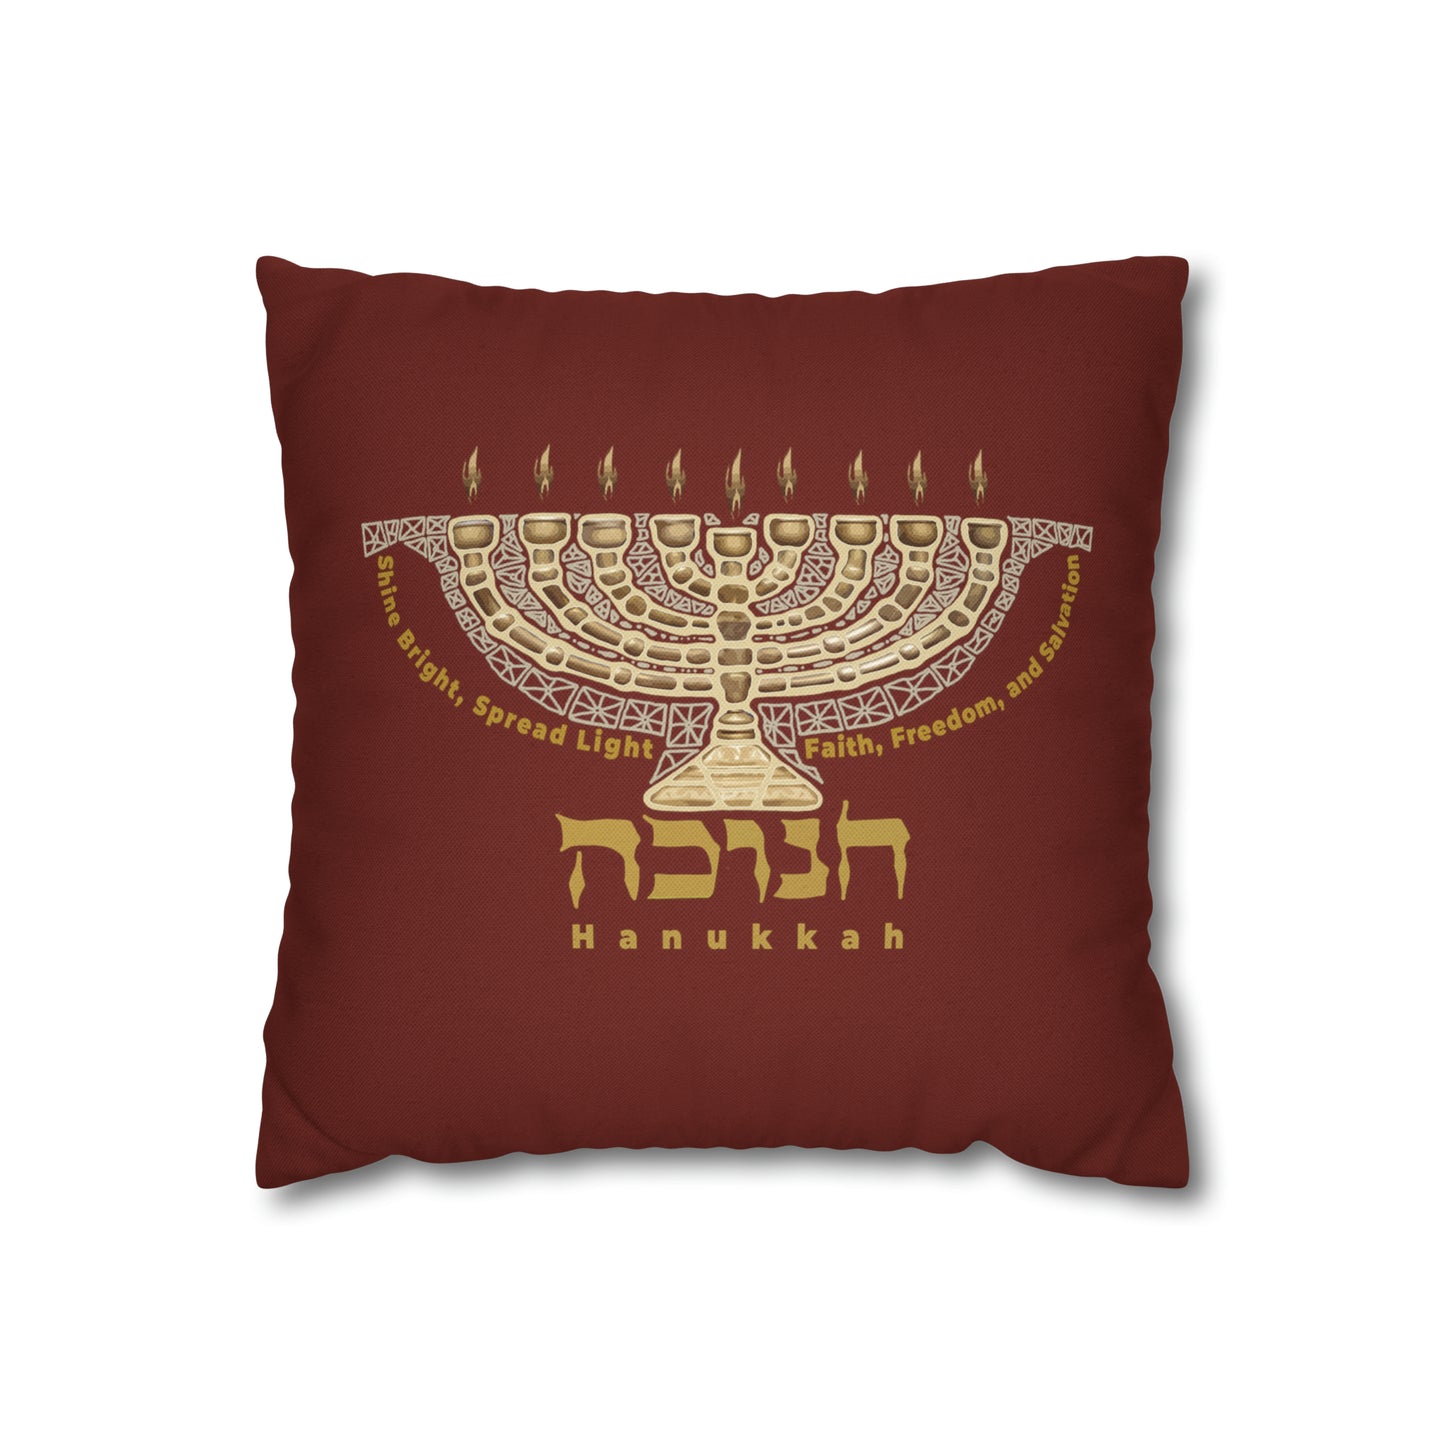 Hanukkah / Bordo Square Pillow Case